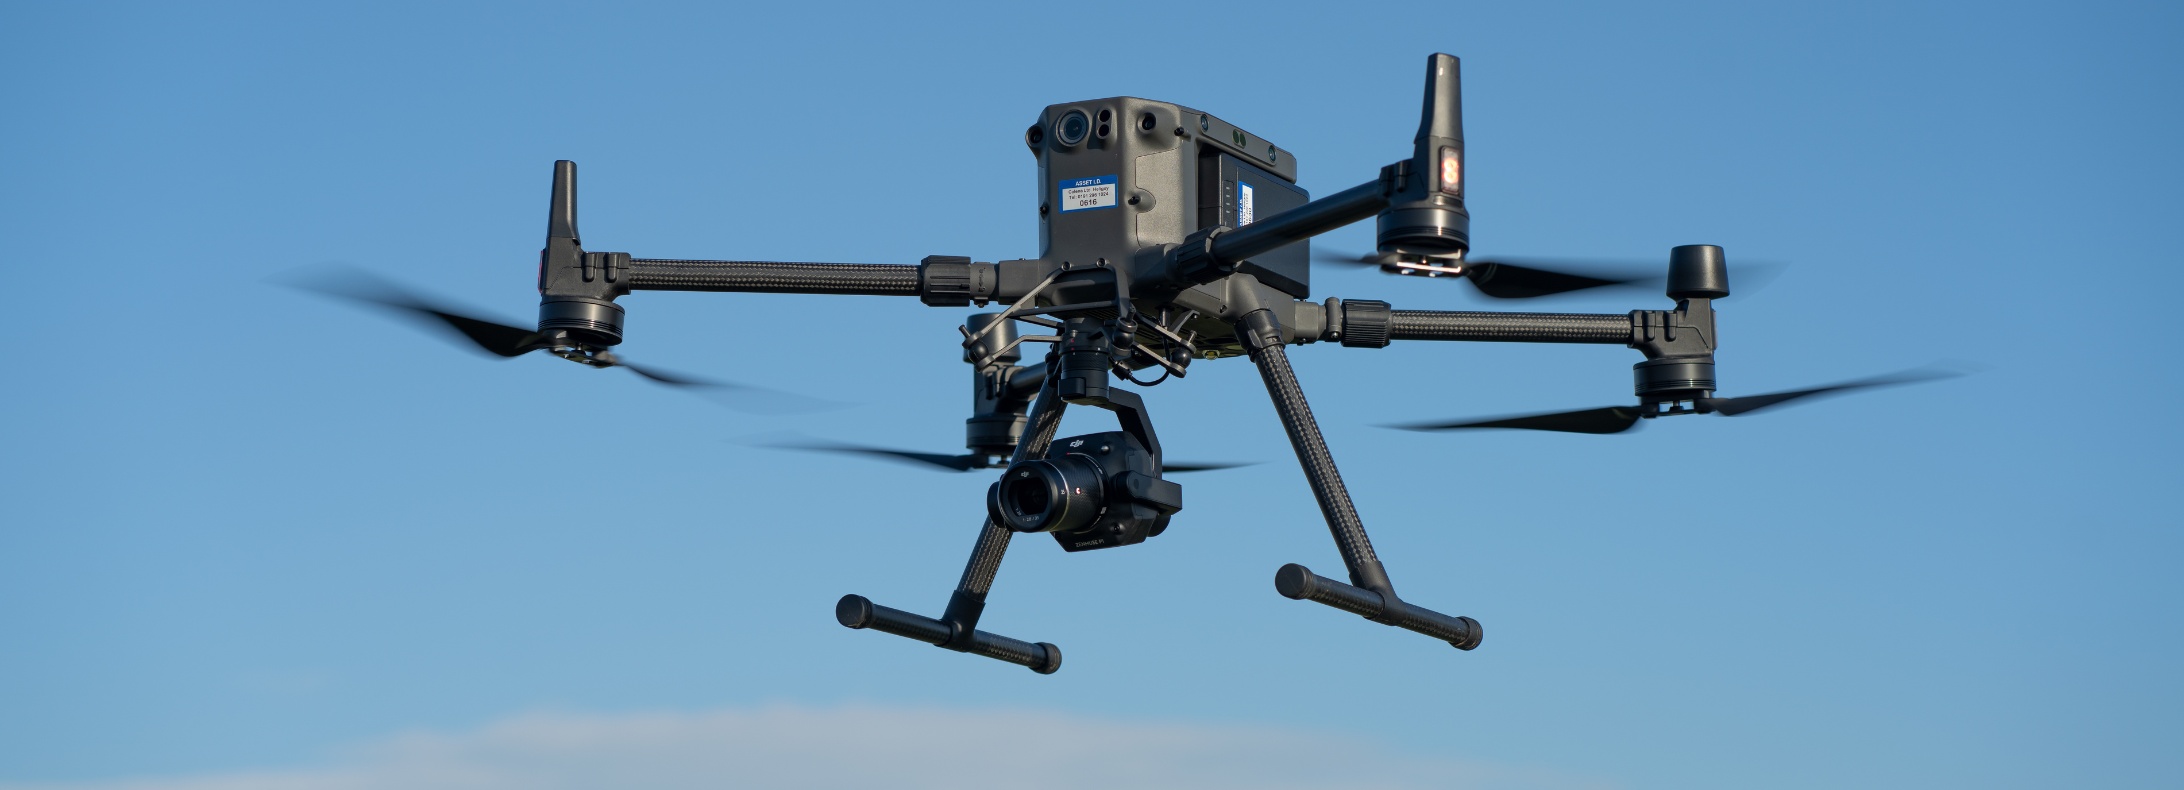 DJI Zenmuse P1 with DJI M300 RTK drone for photogrammetry.